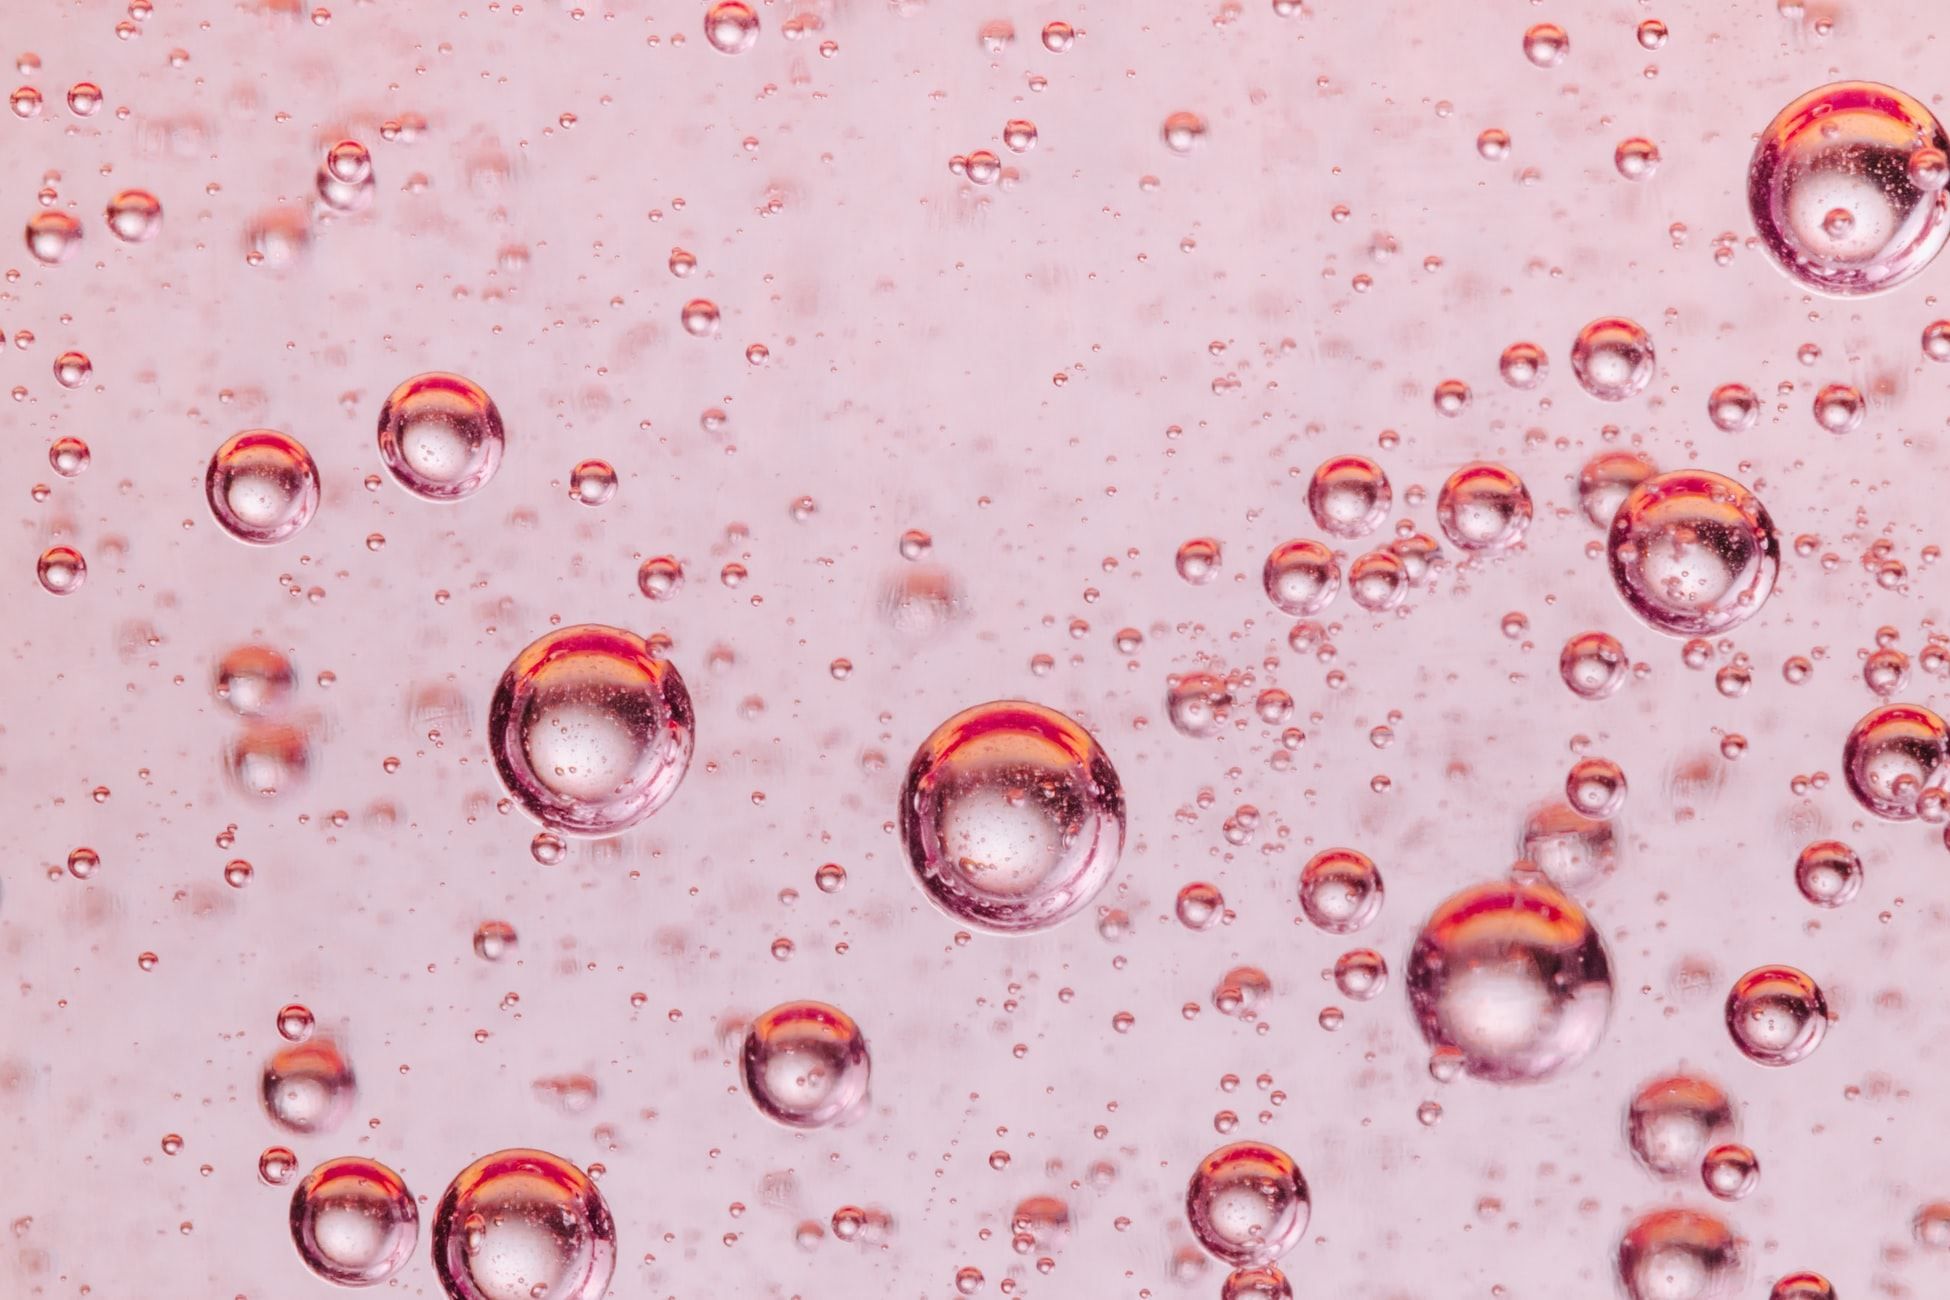 Bubbles on a pink background - Bubbles